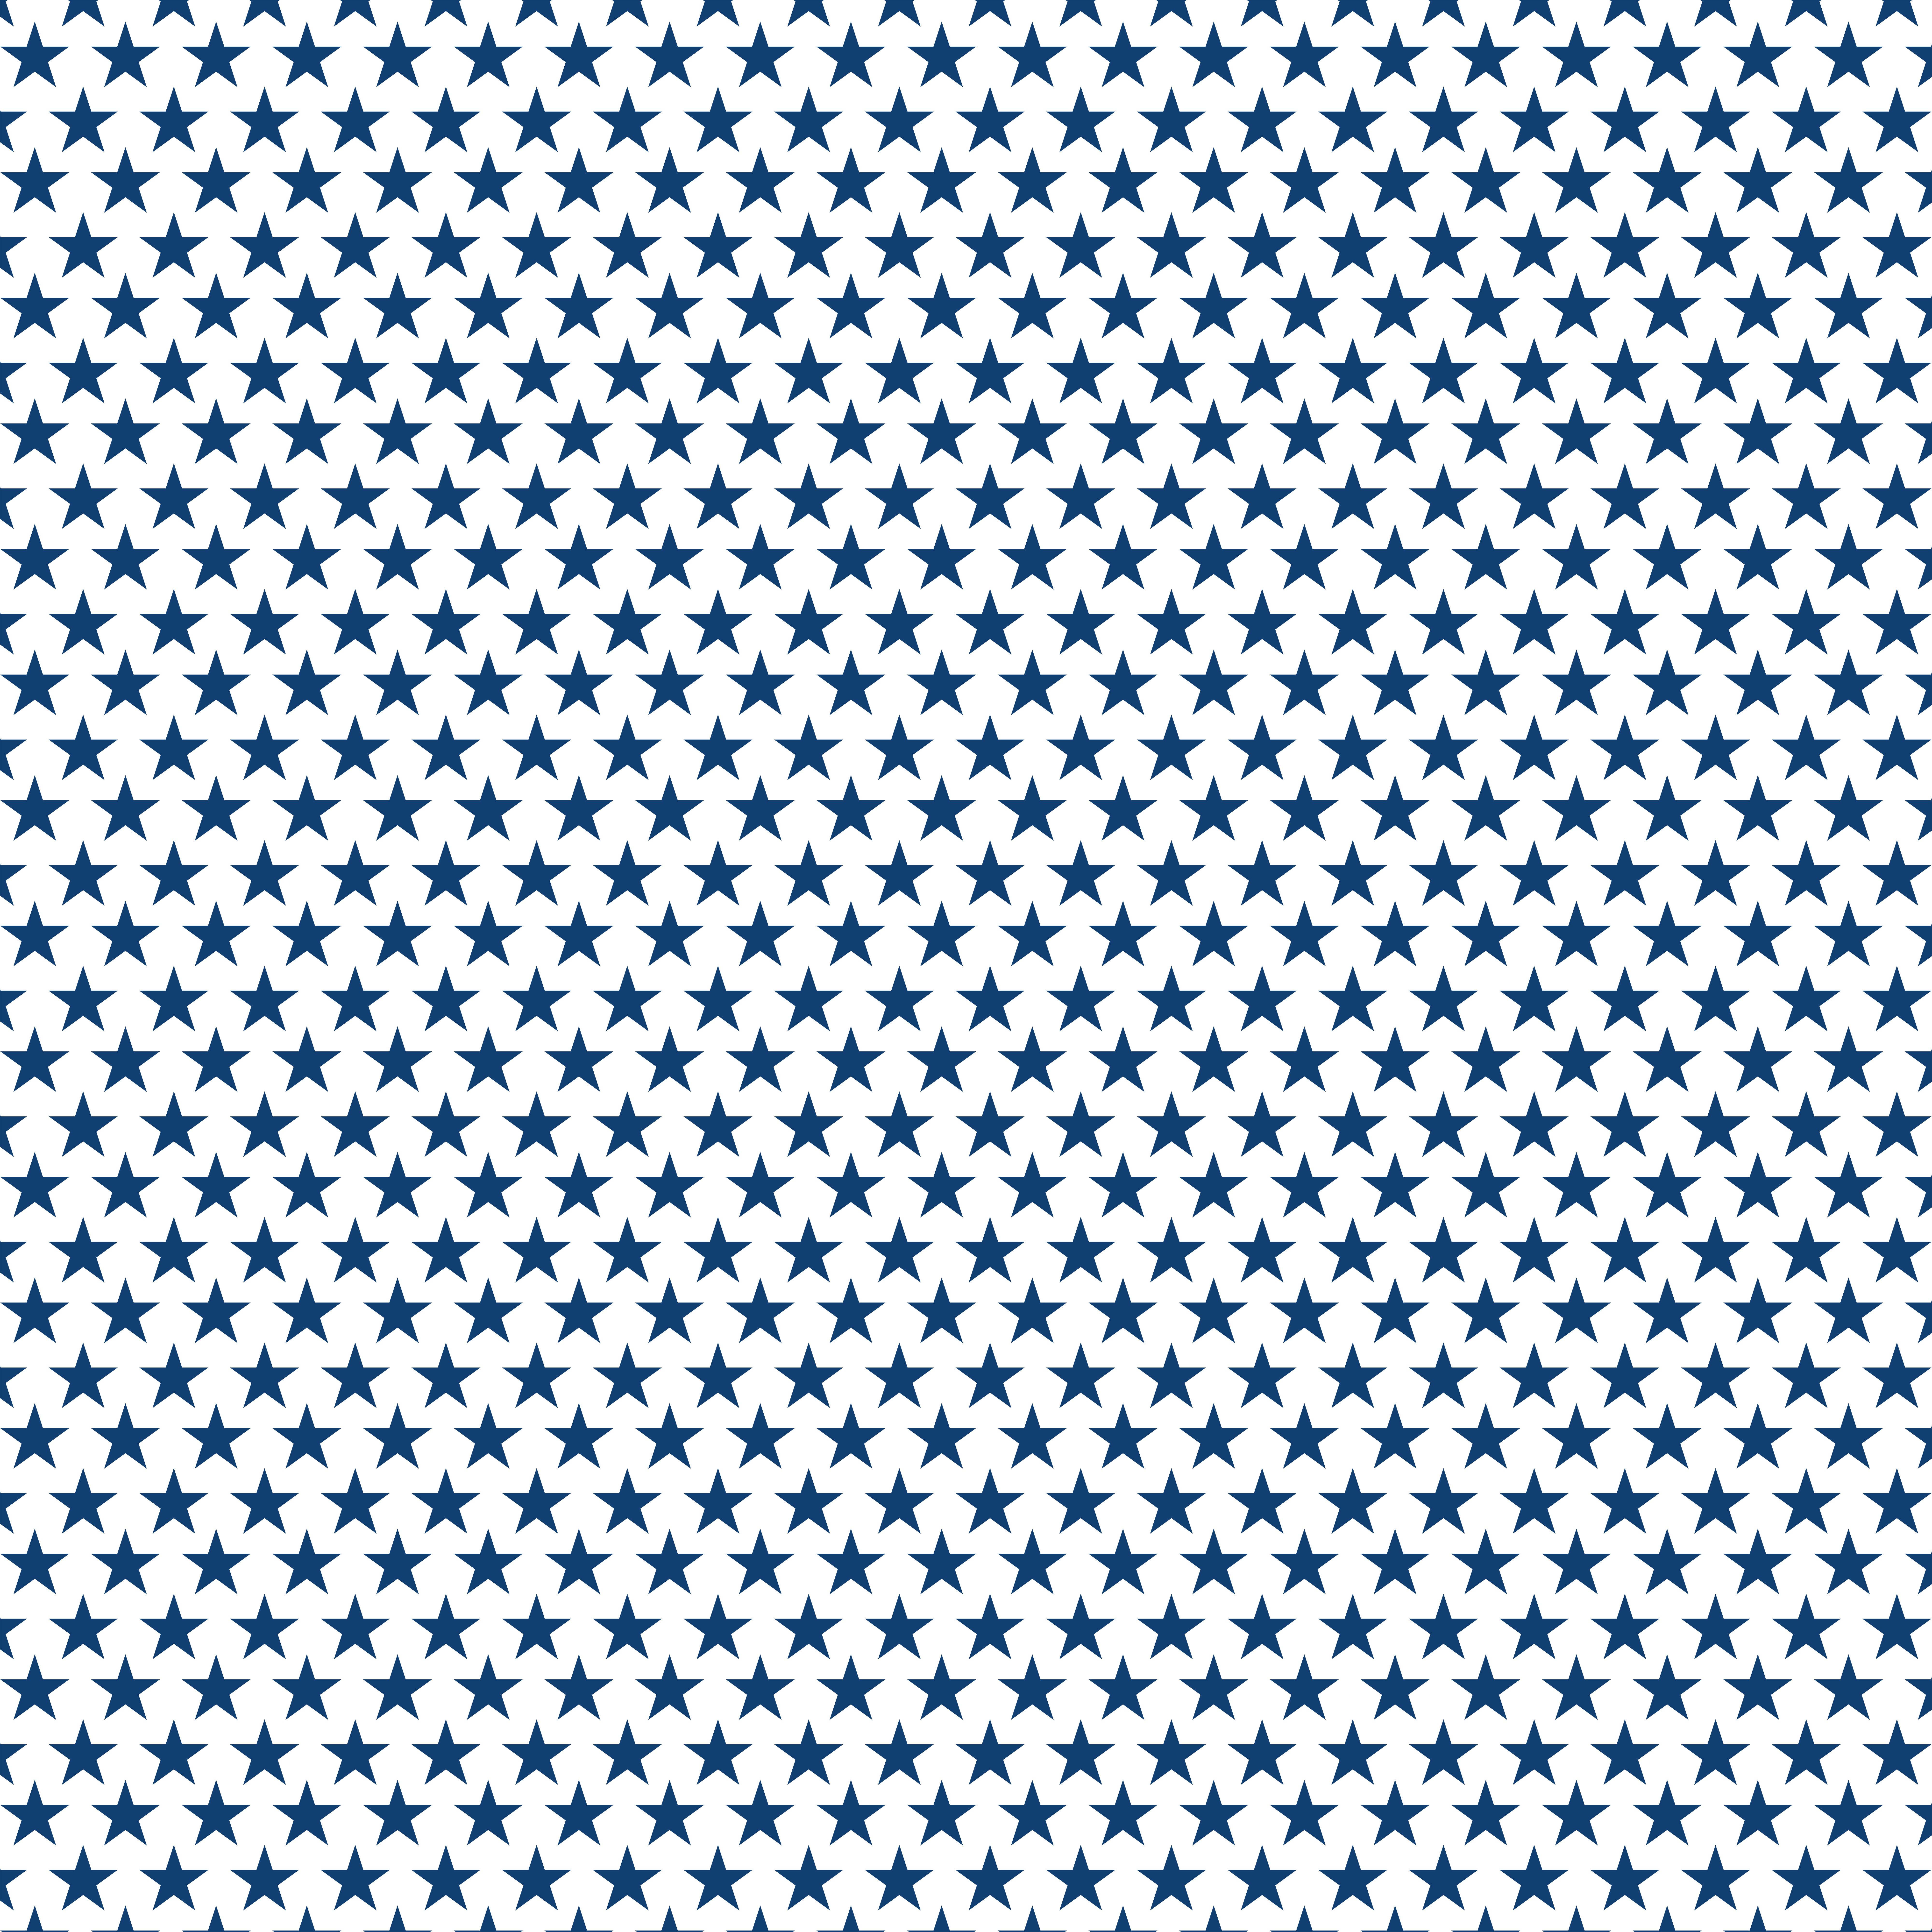 Stars for Backgrounds Transparent PNG Clip Art Image ...